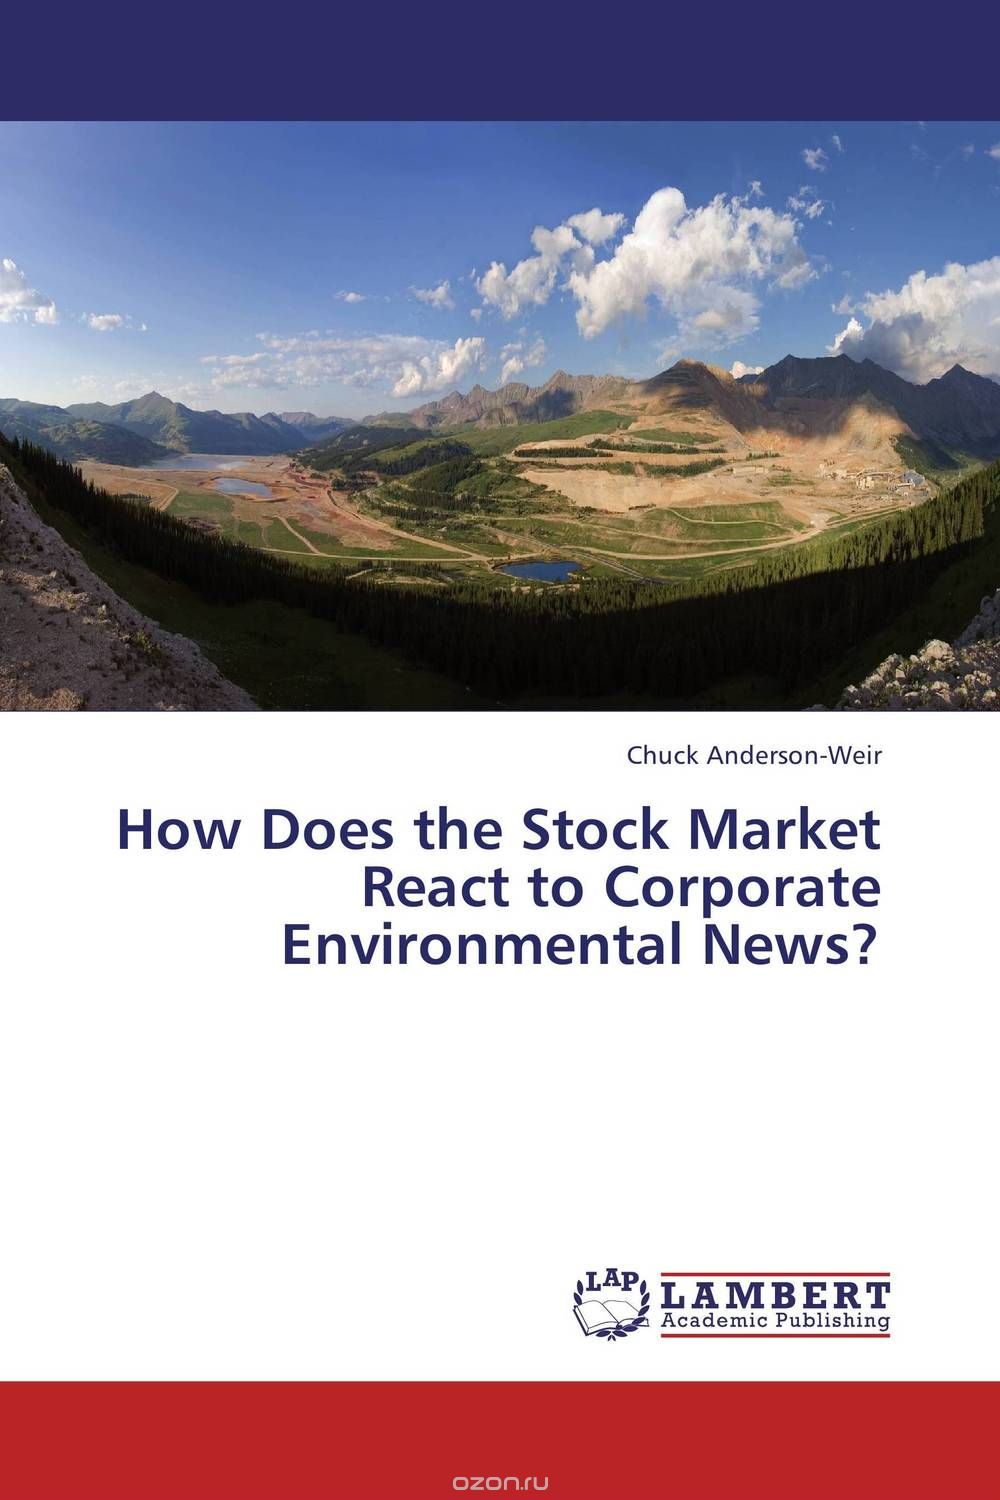 Скачать книгу "How Does the Stock Market React to Corporate Environmental News?"